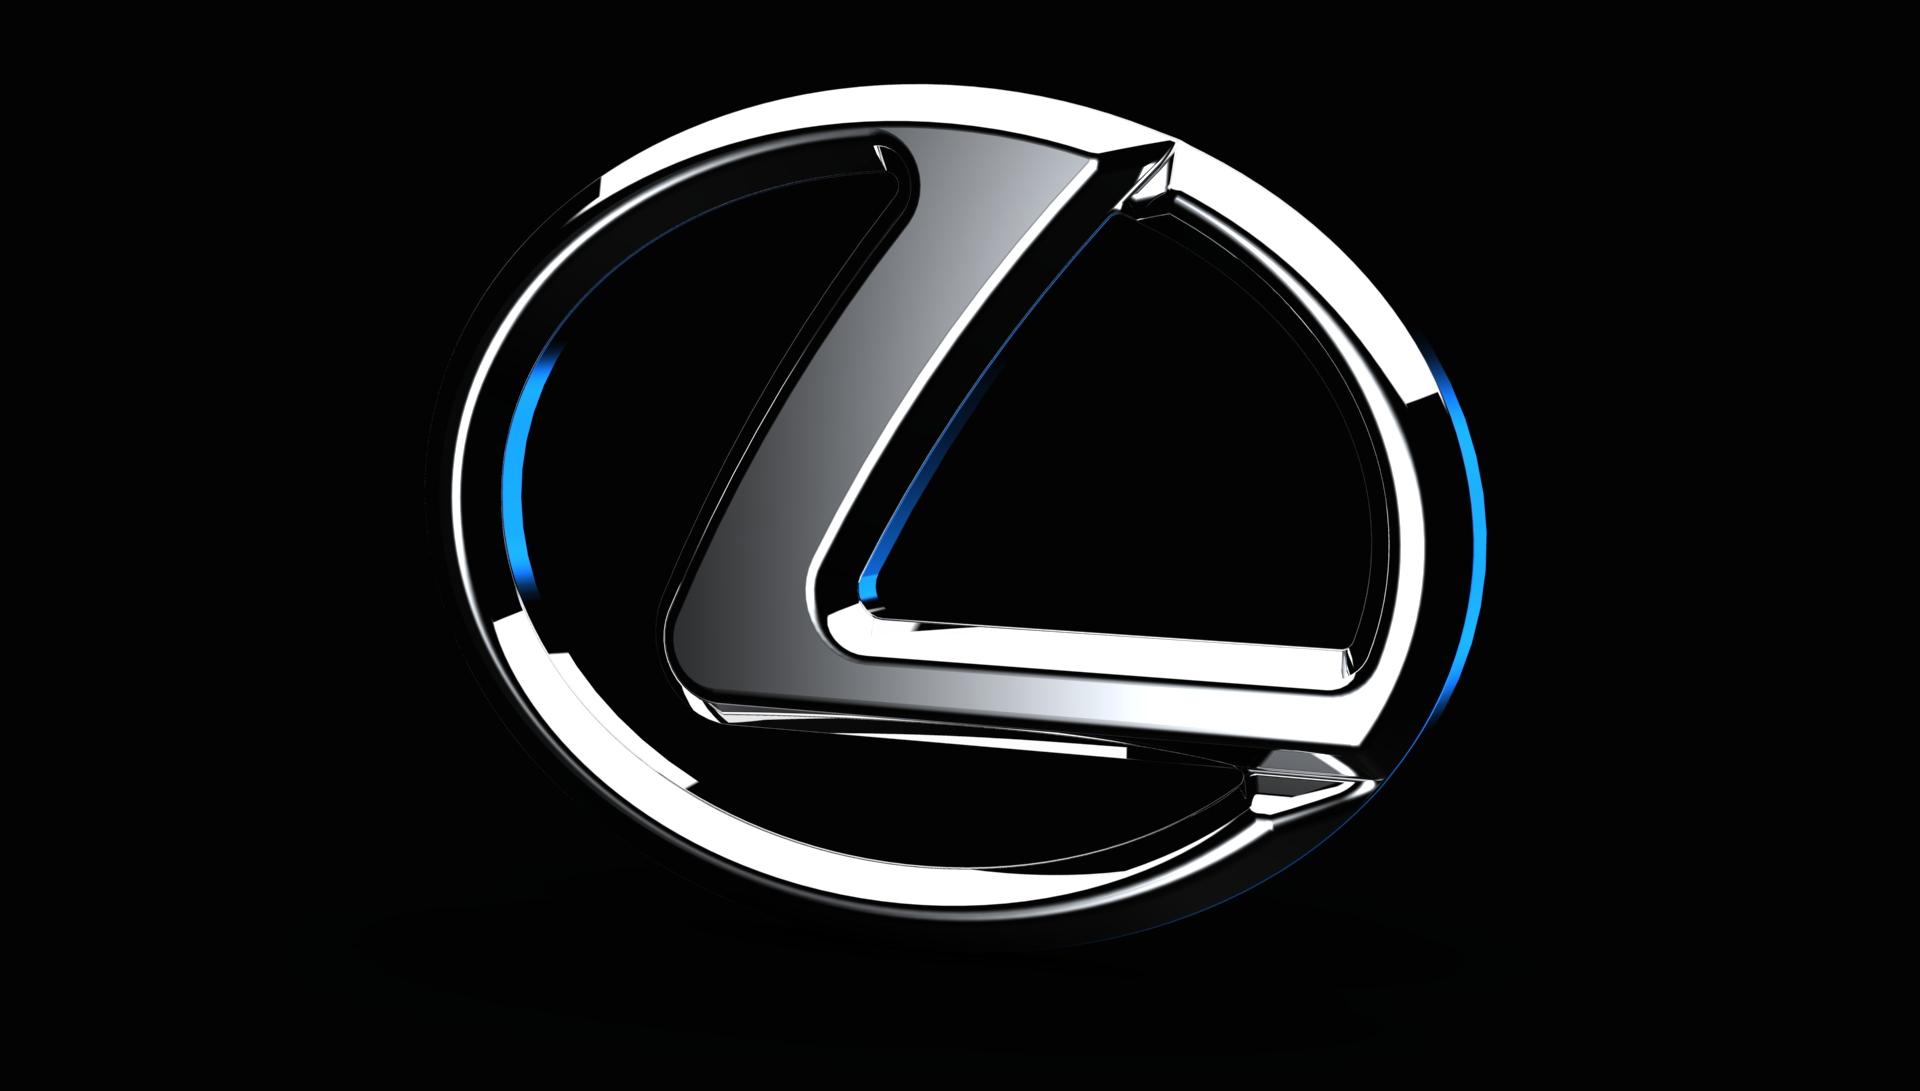 Lexus symbol wallpaper for mobile